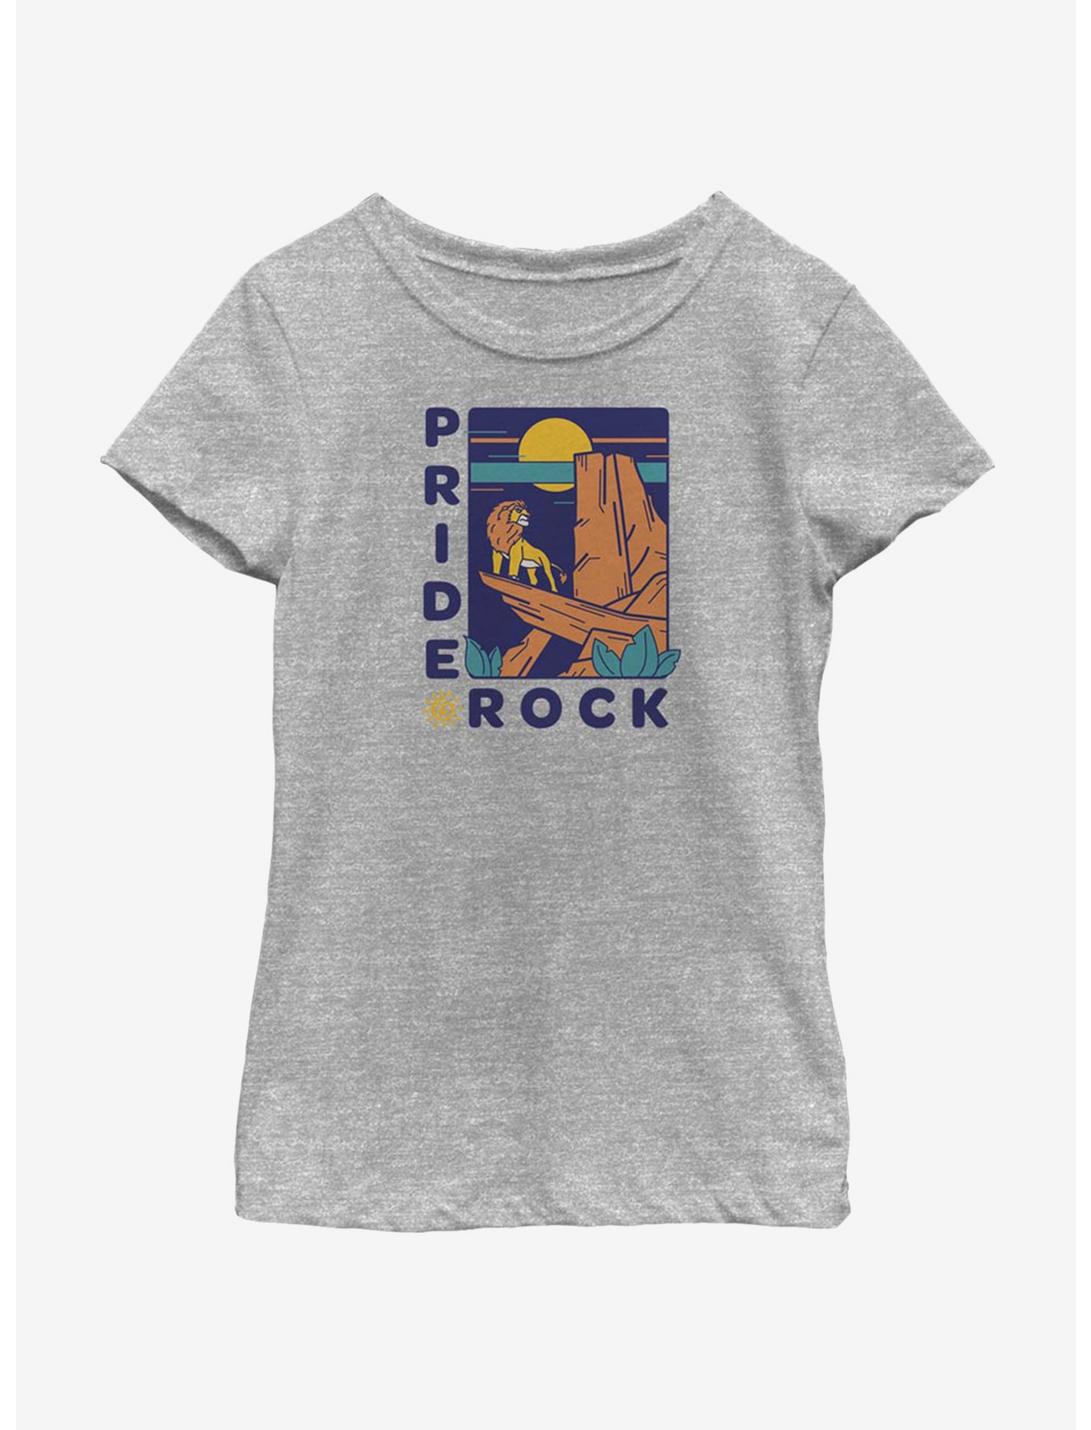 Disney The Lion King Pride Rock Badge Youth Girls T-Shirt, ATH HTR, hi-res